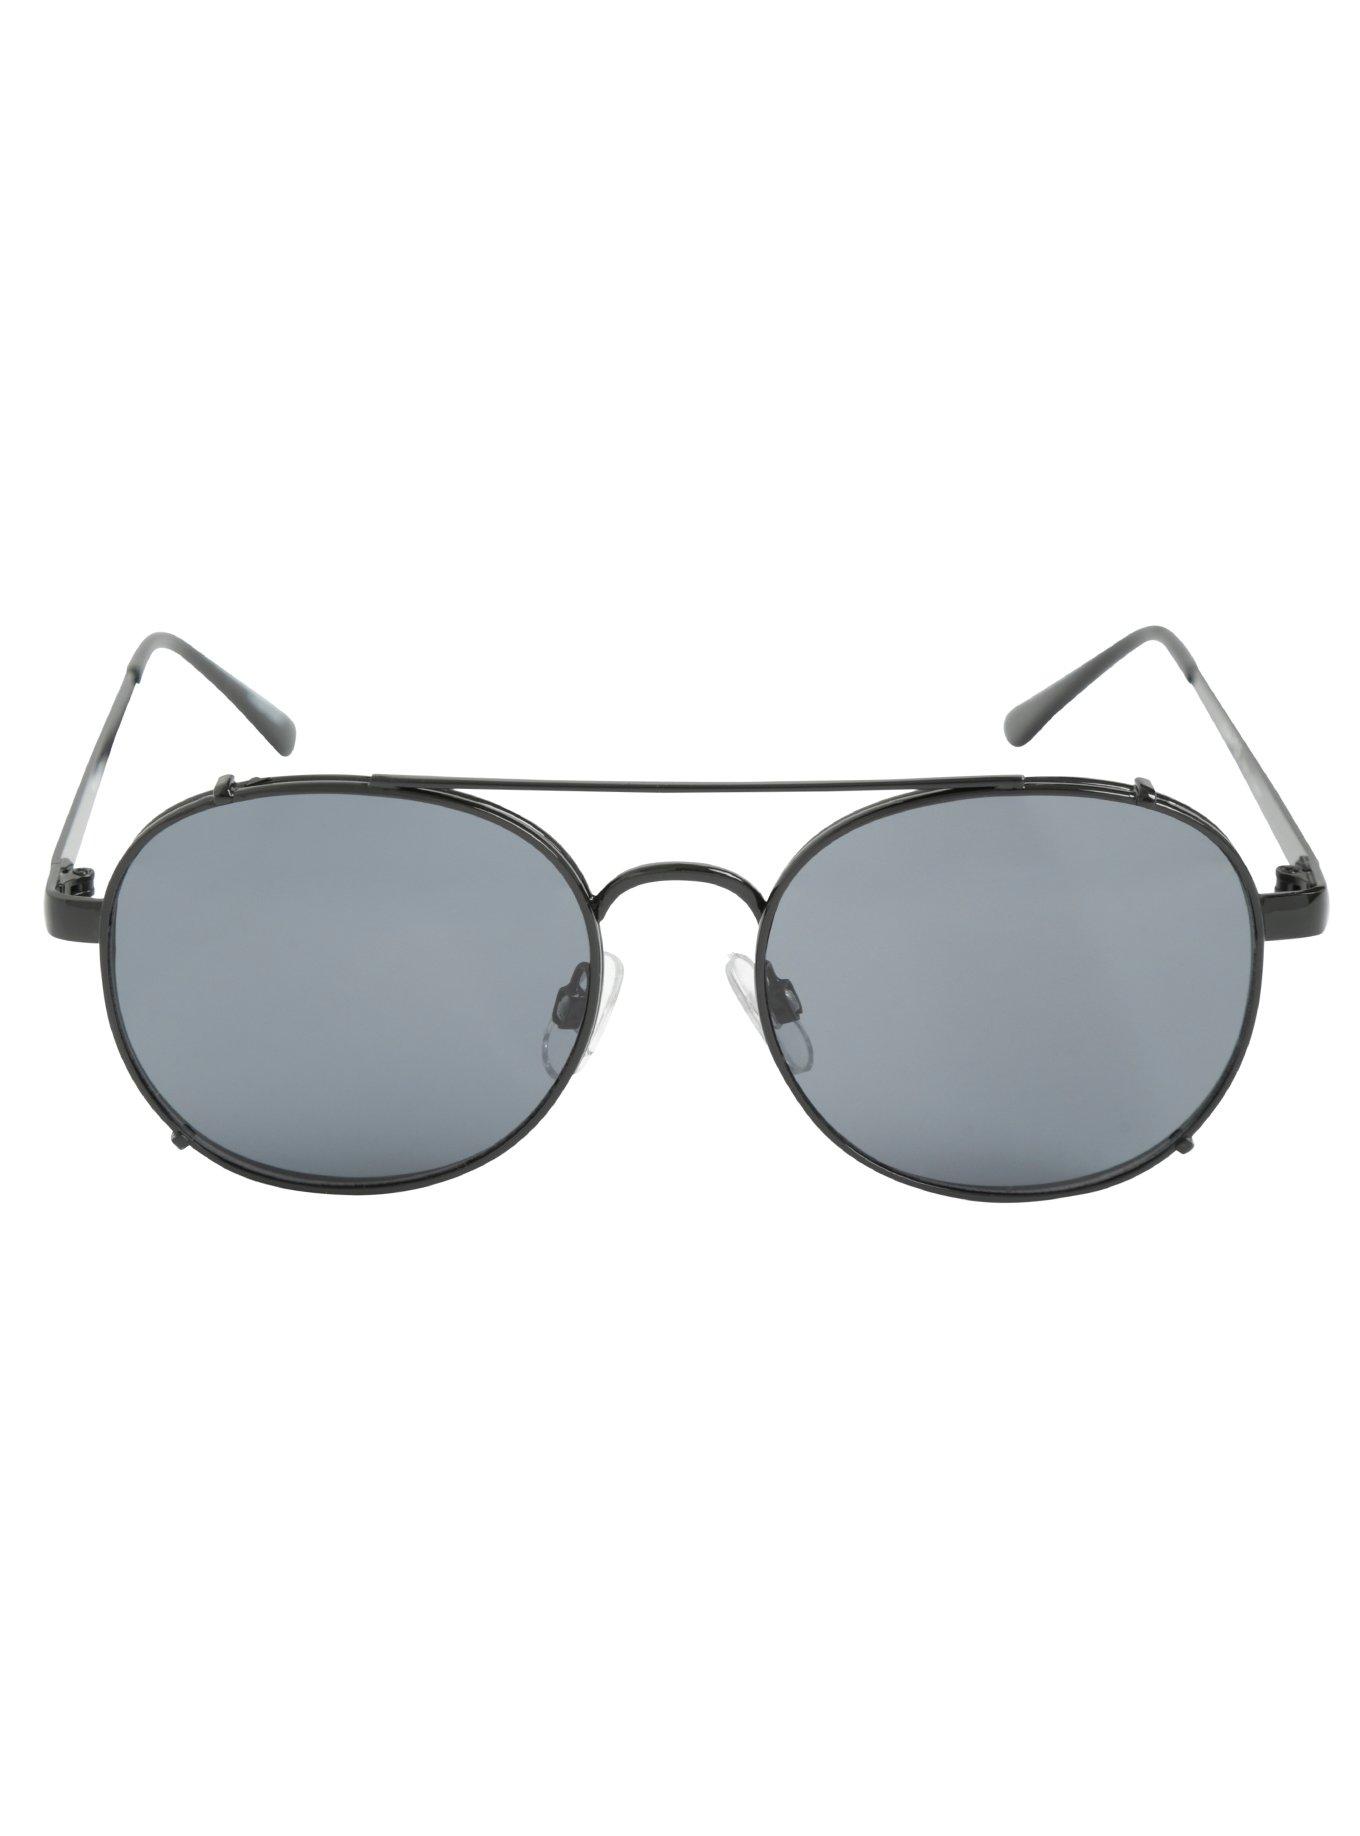 Black Metal Top Bridge Round Smoke Lens Sunglasses, , alternate